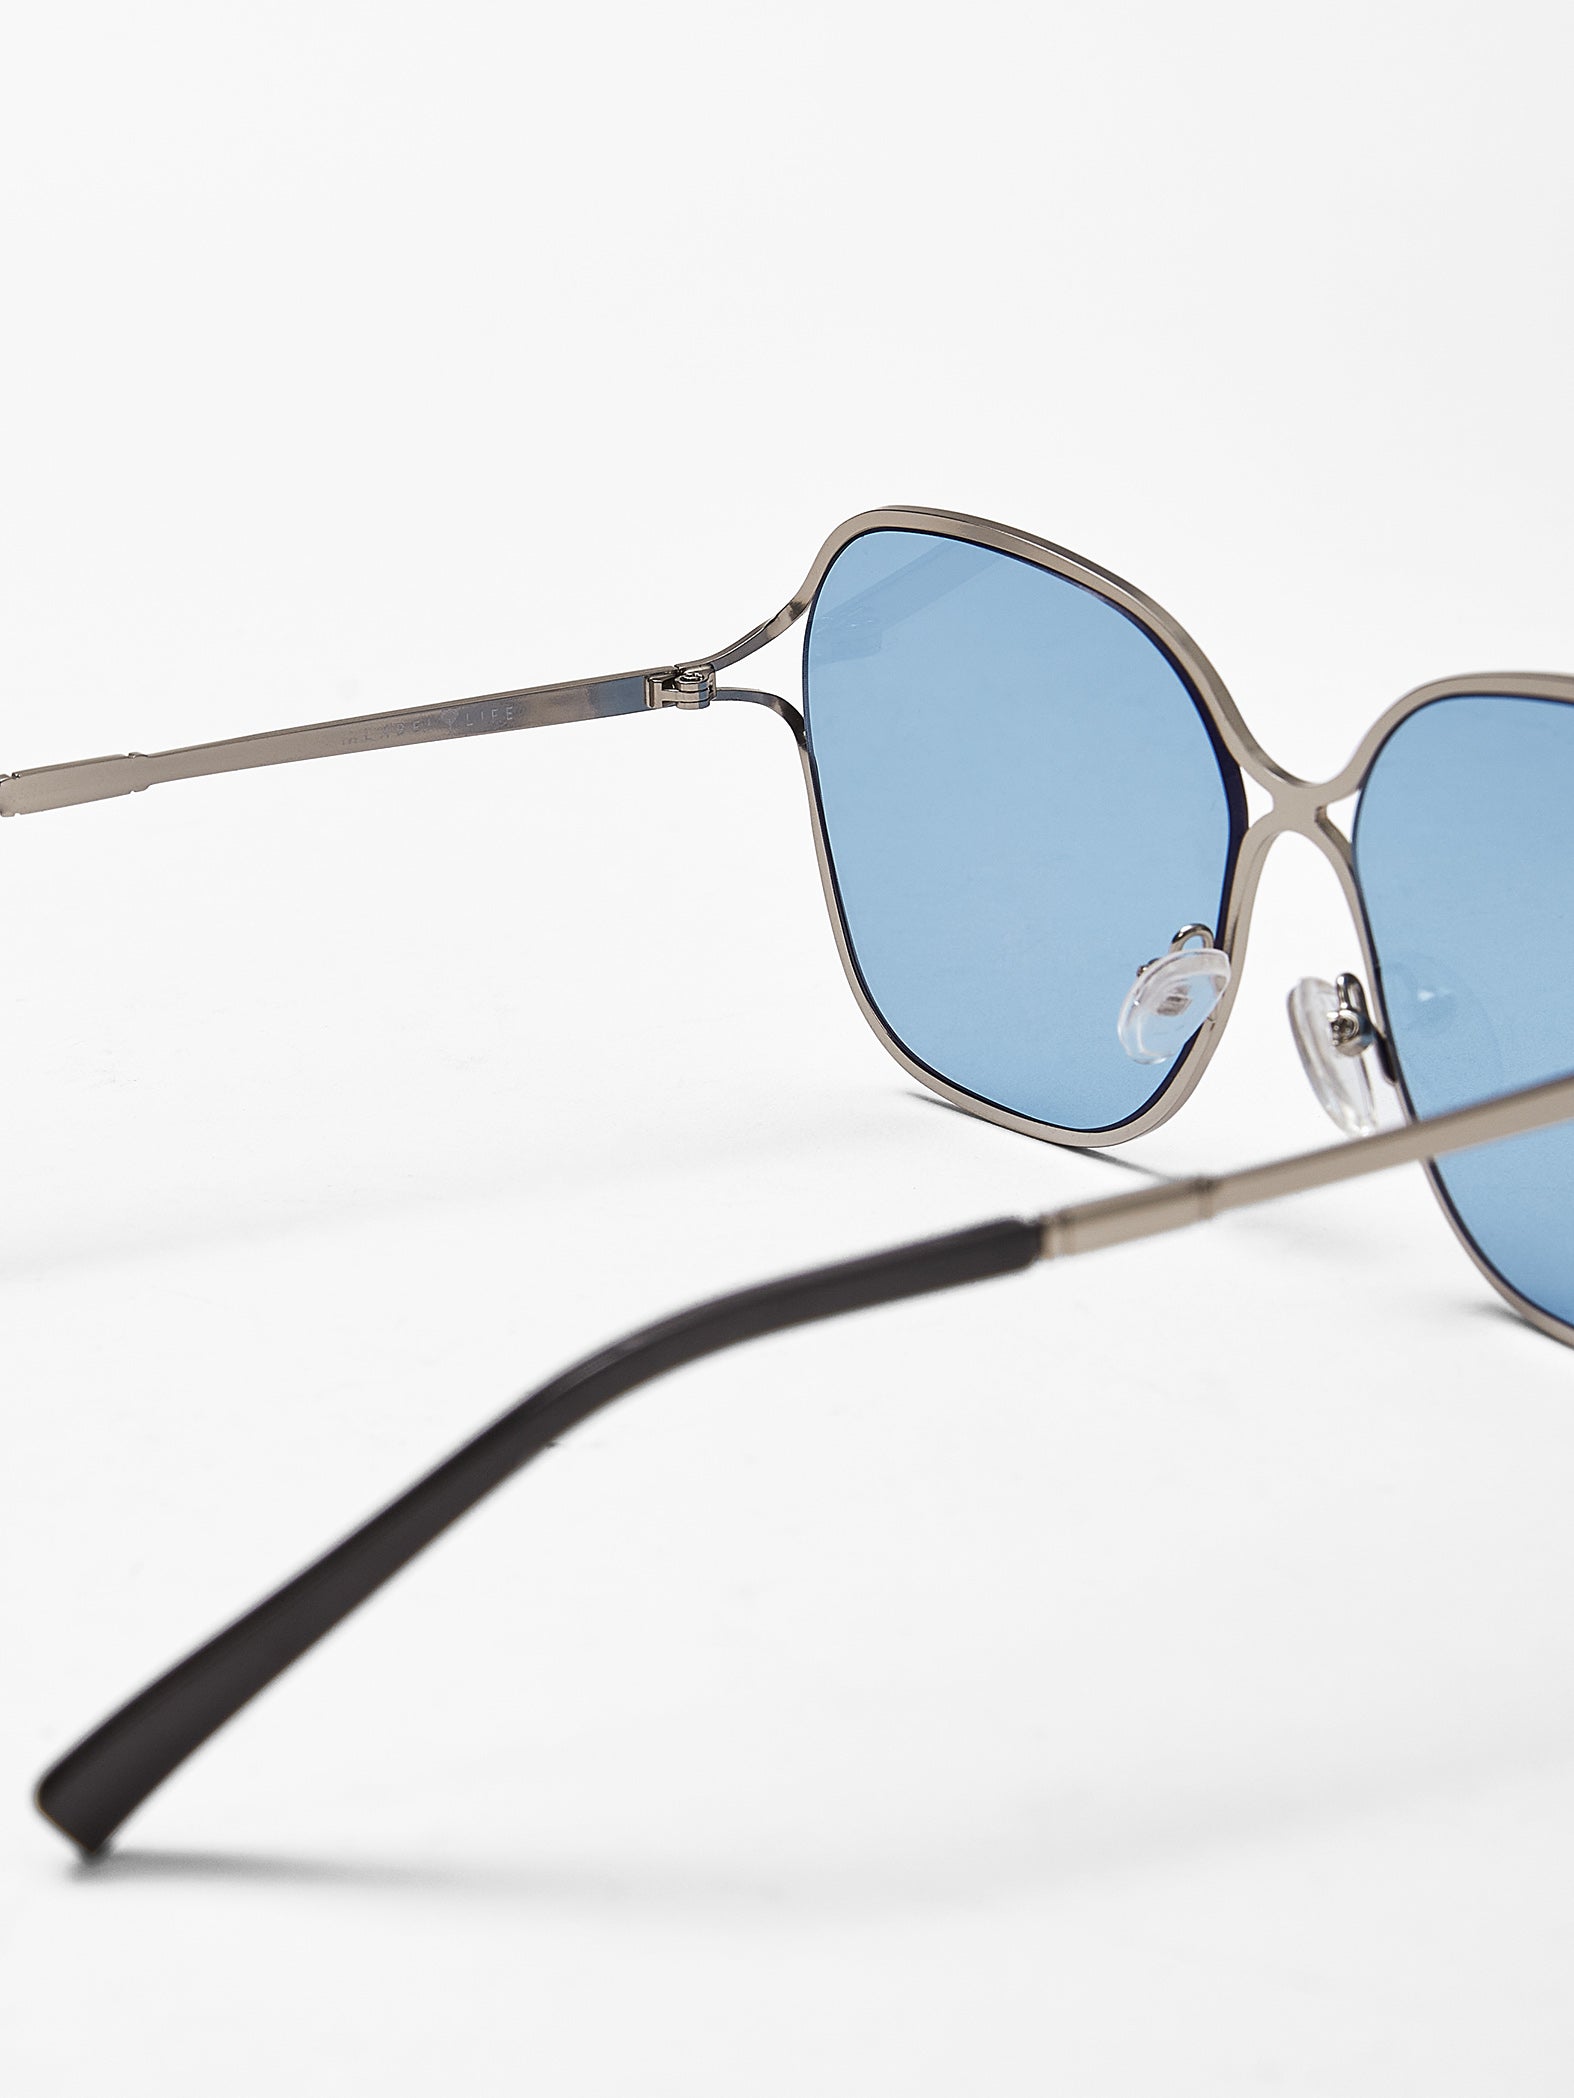 Aqua Metallic Frame Sunglasses